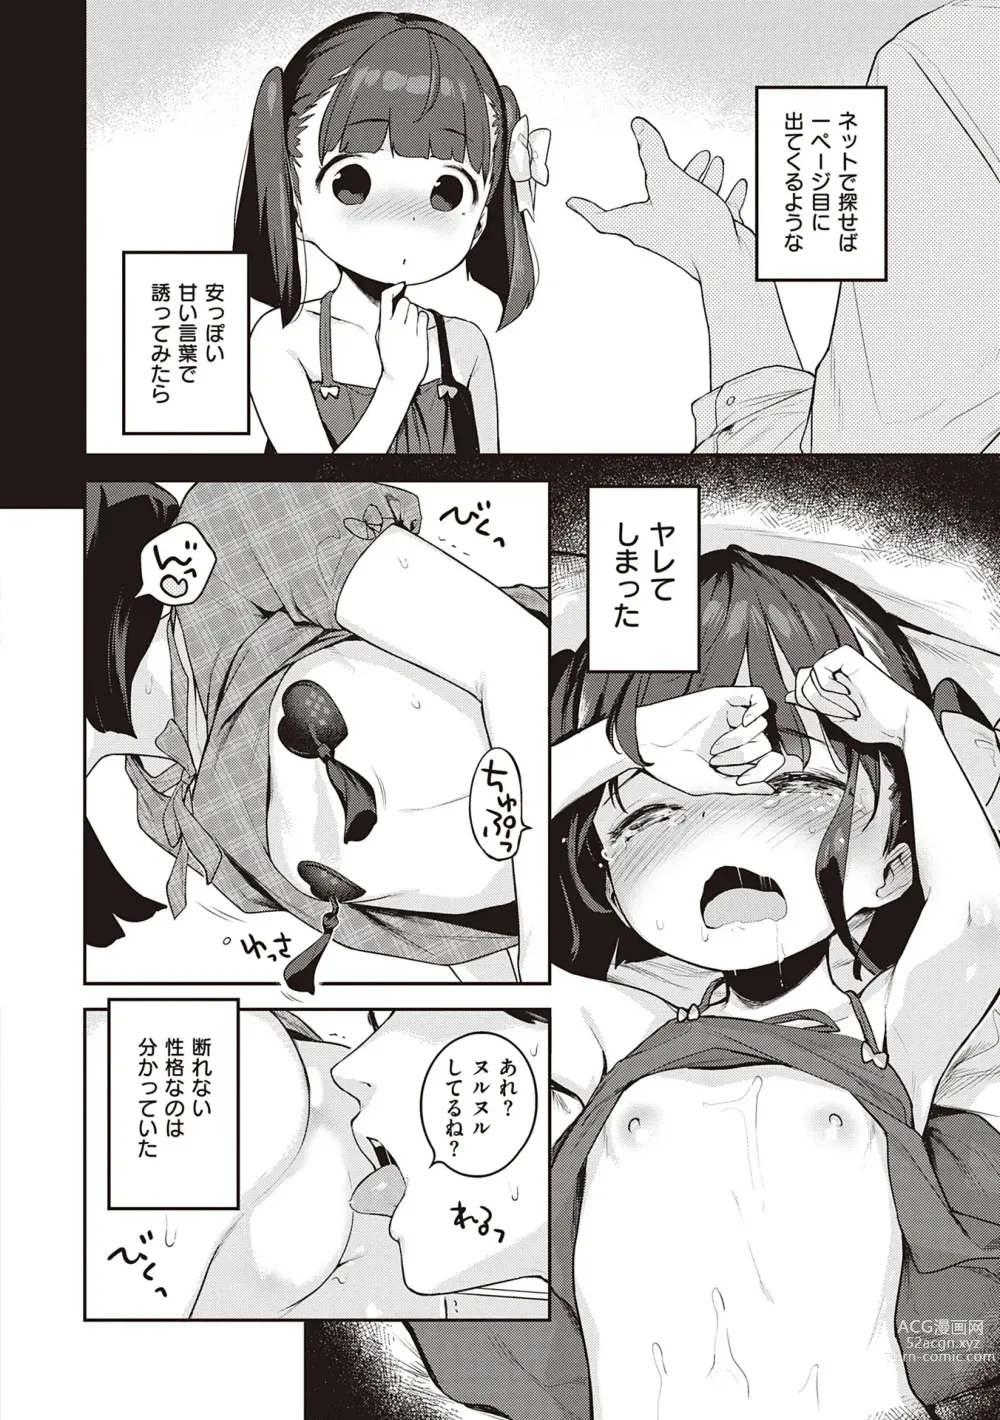 Page 302 of manga Motto! Hatsukoi Ribbon.